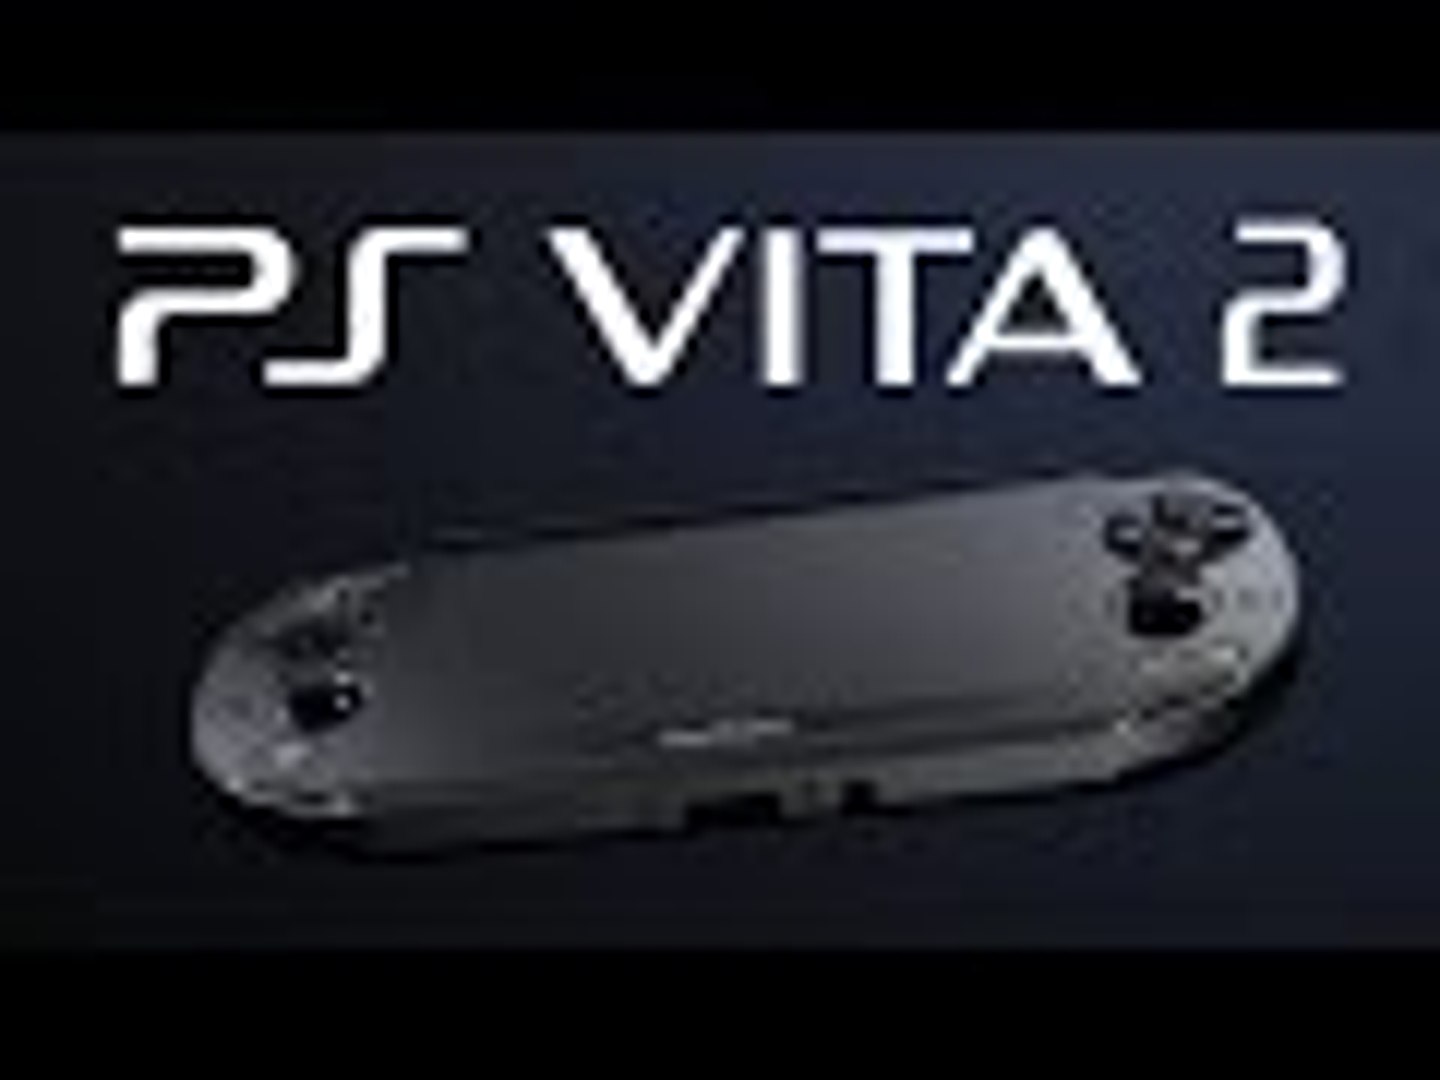 PS Vita 2 Rumors: Future of the PlayStation Vita! (2016) - video Dailymotion